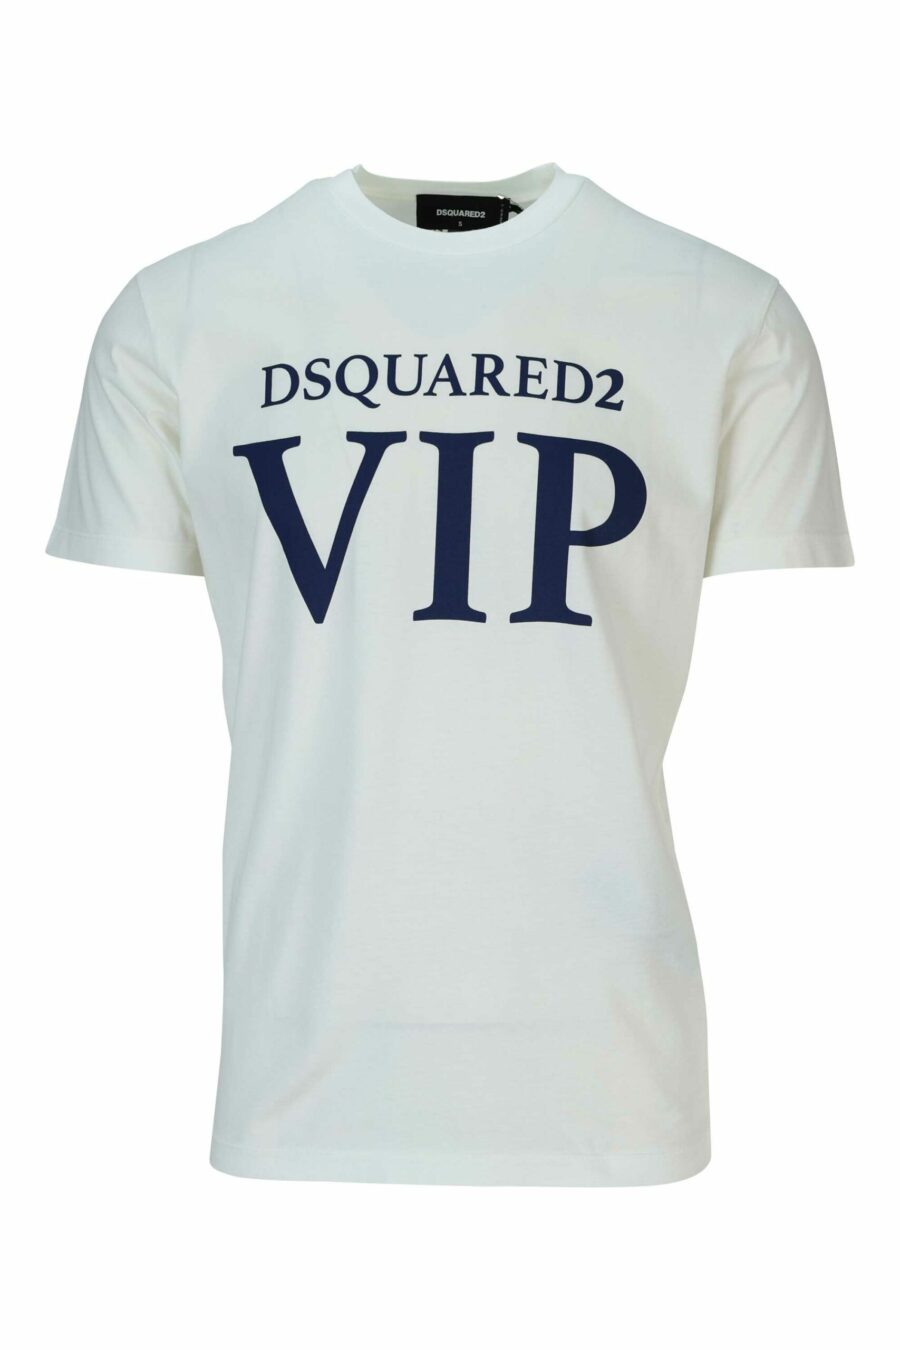 Camiseta blanca con maxilogo "vip" - 8054148578855 scaled